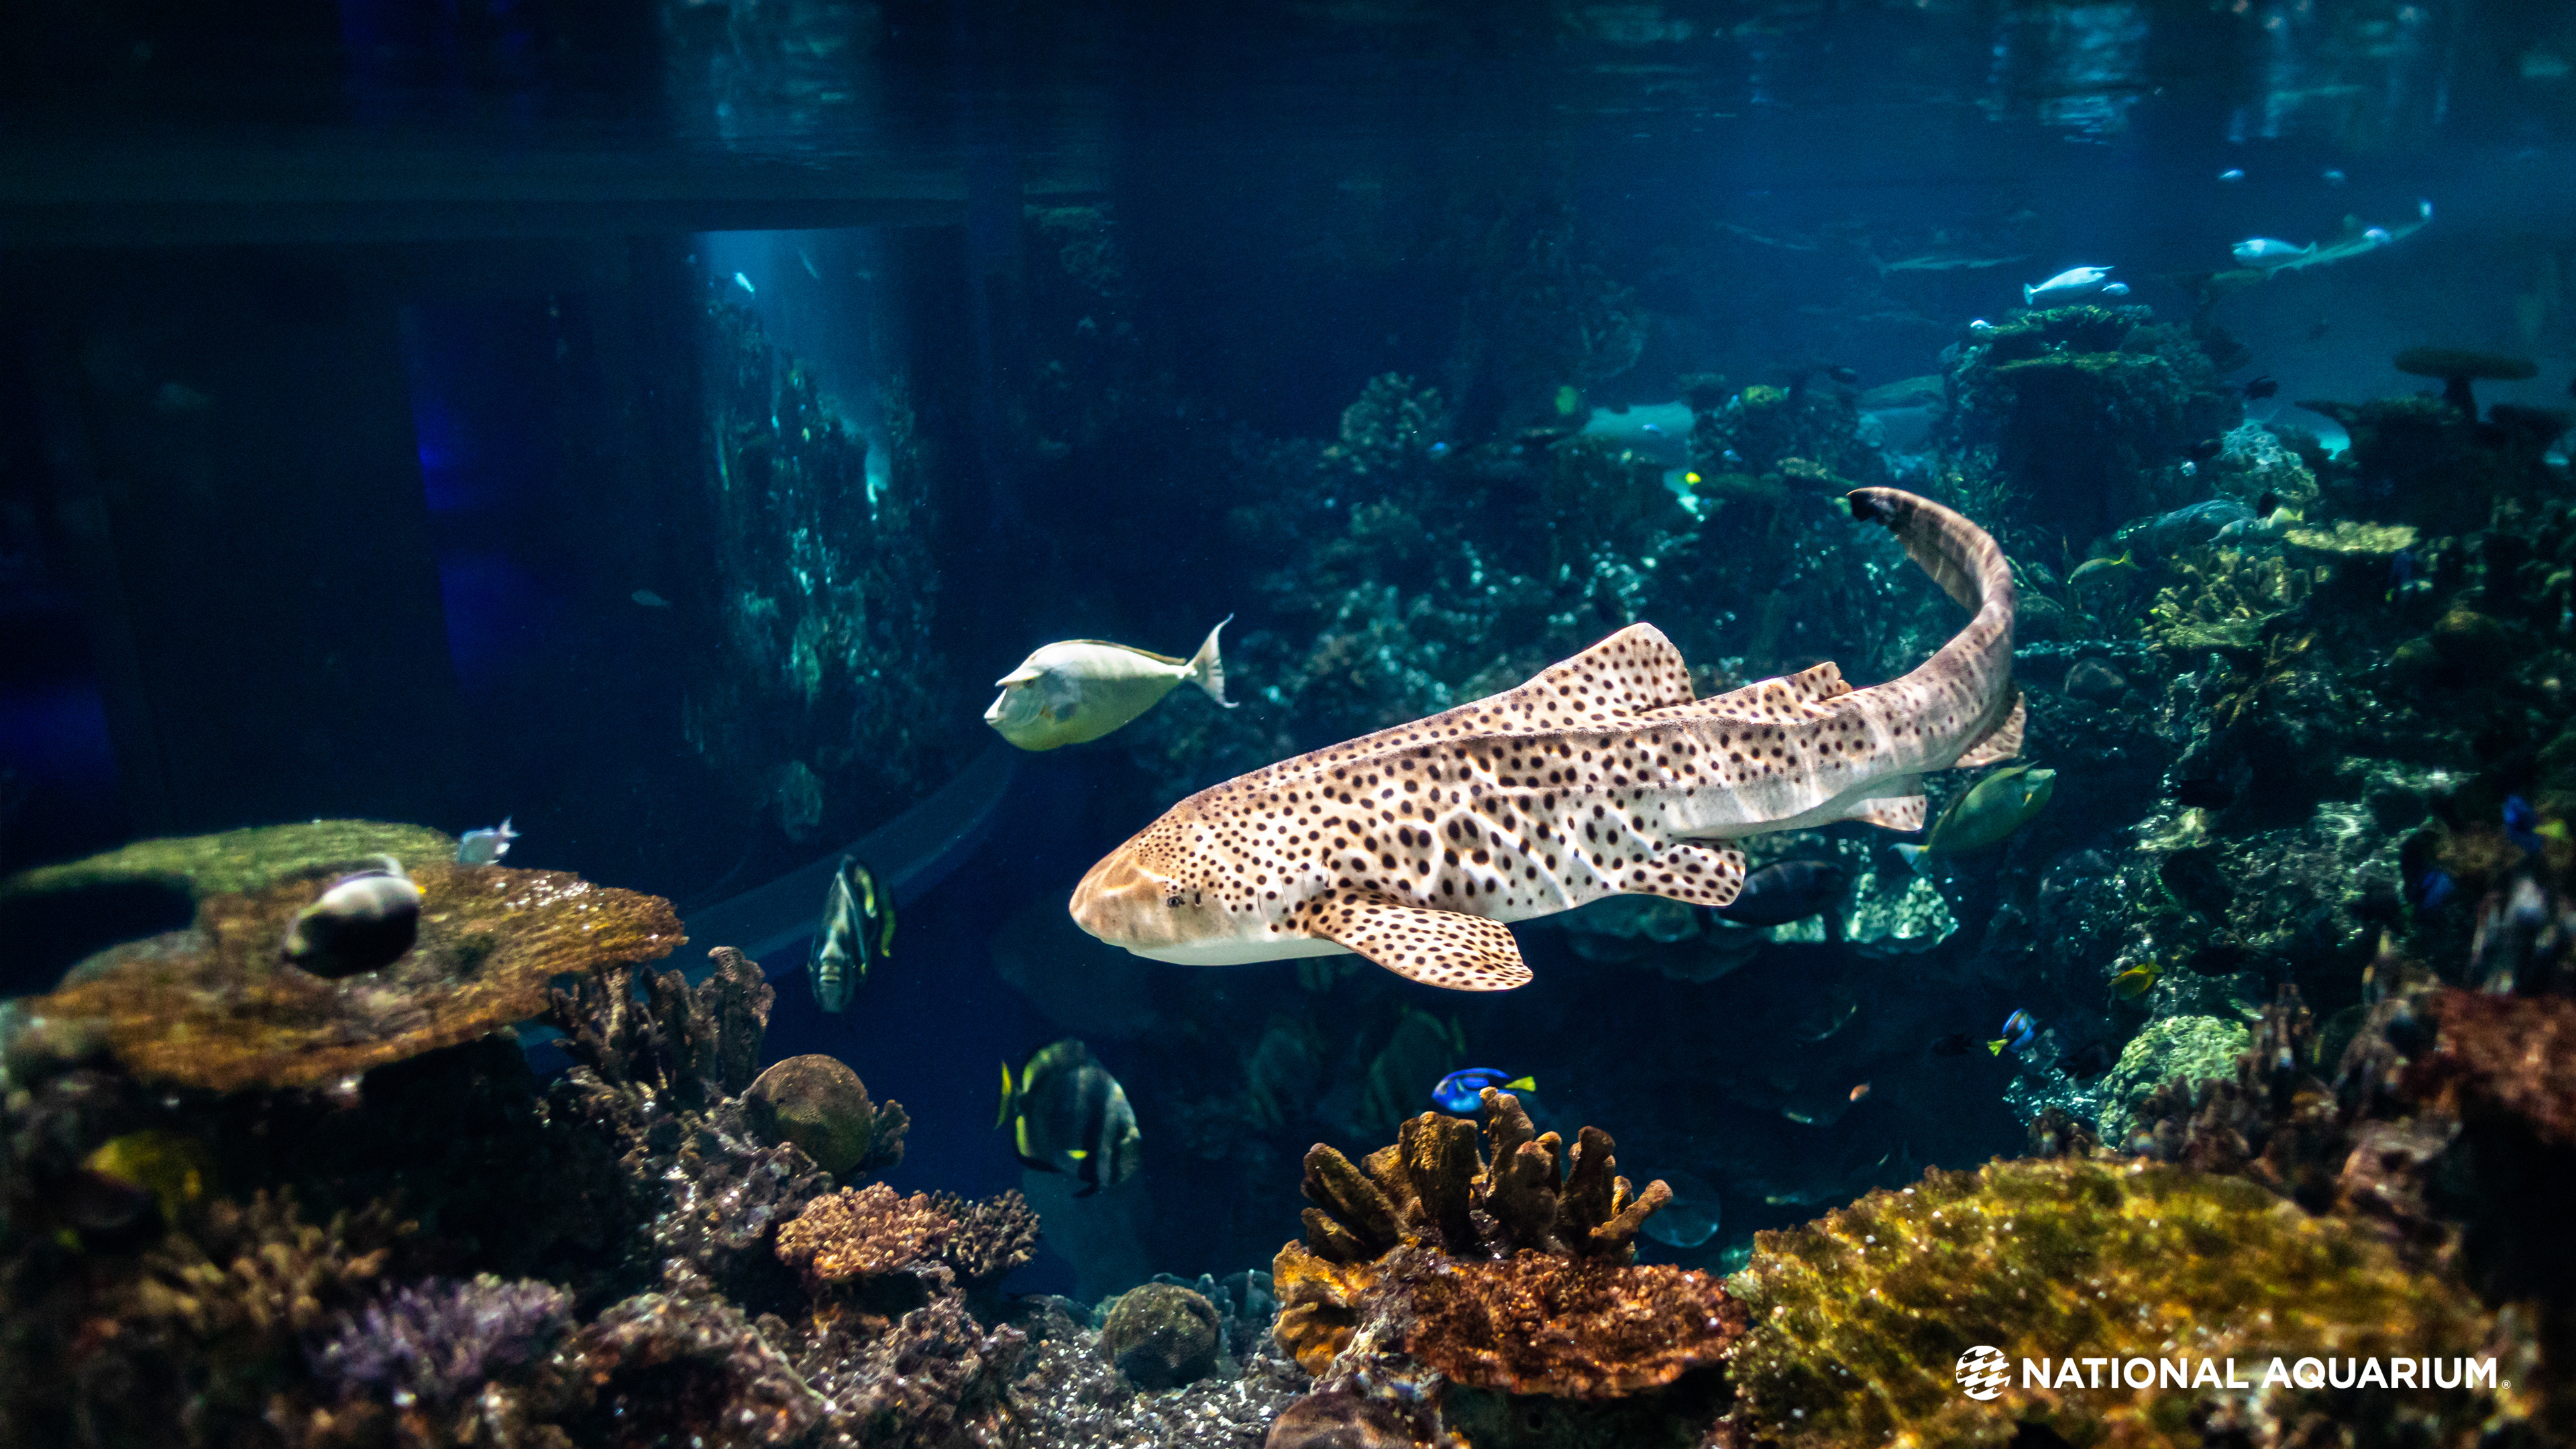 National Aquarium - Wallpaper Wednesdays: A Calming, Colorful Coral Reef